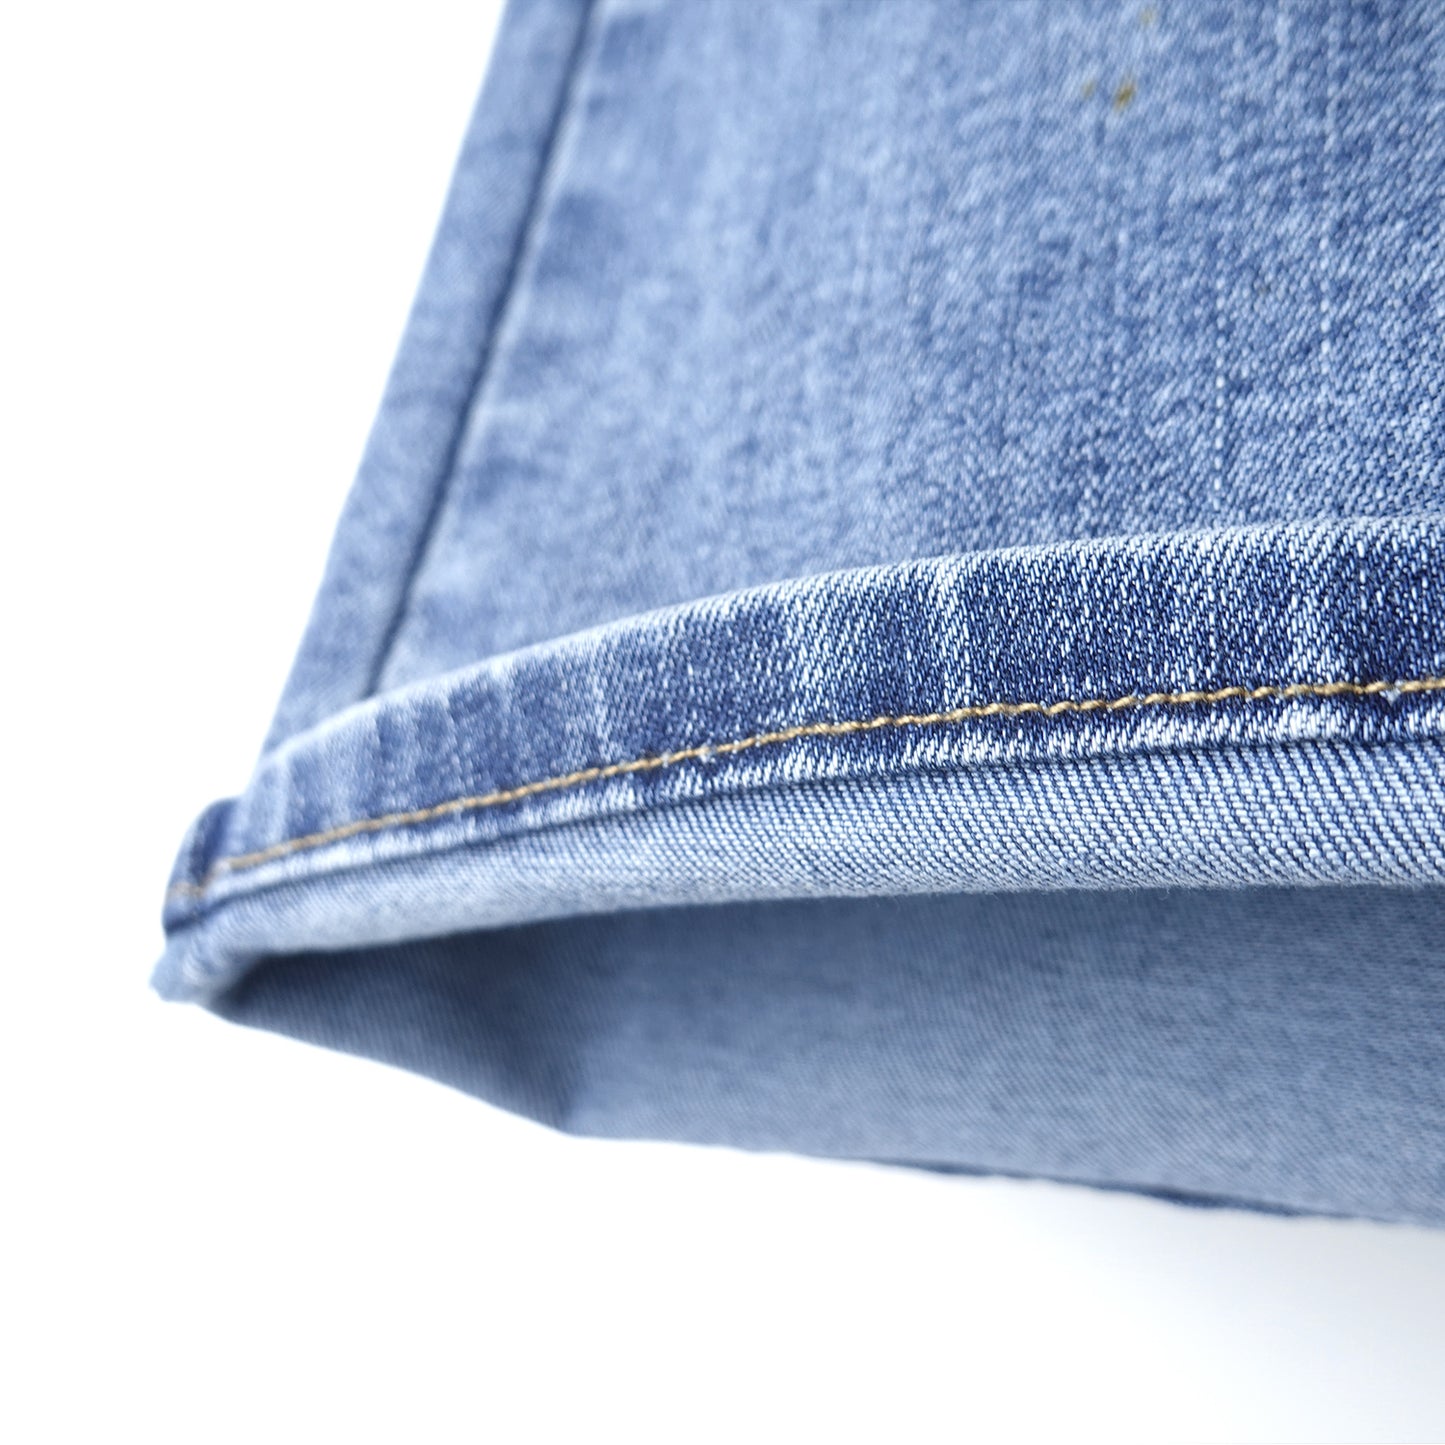 Little Girls Jeans, 12M-13T Wide Size Range Wide-leg Flared Stretchy Denim Pants